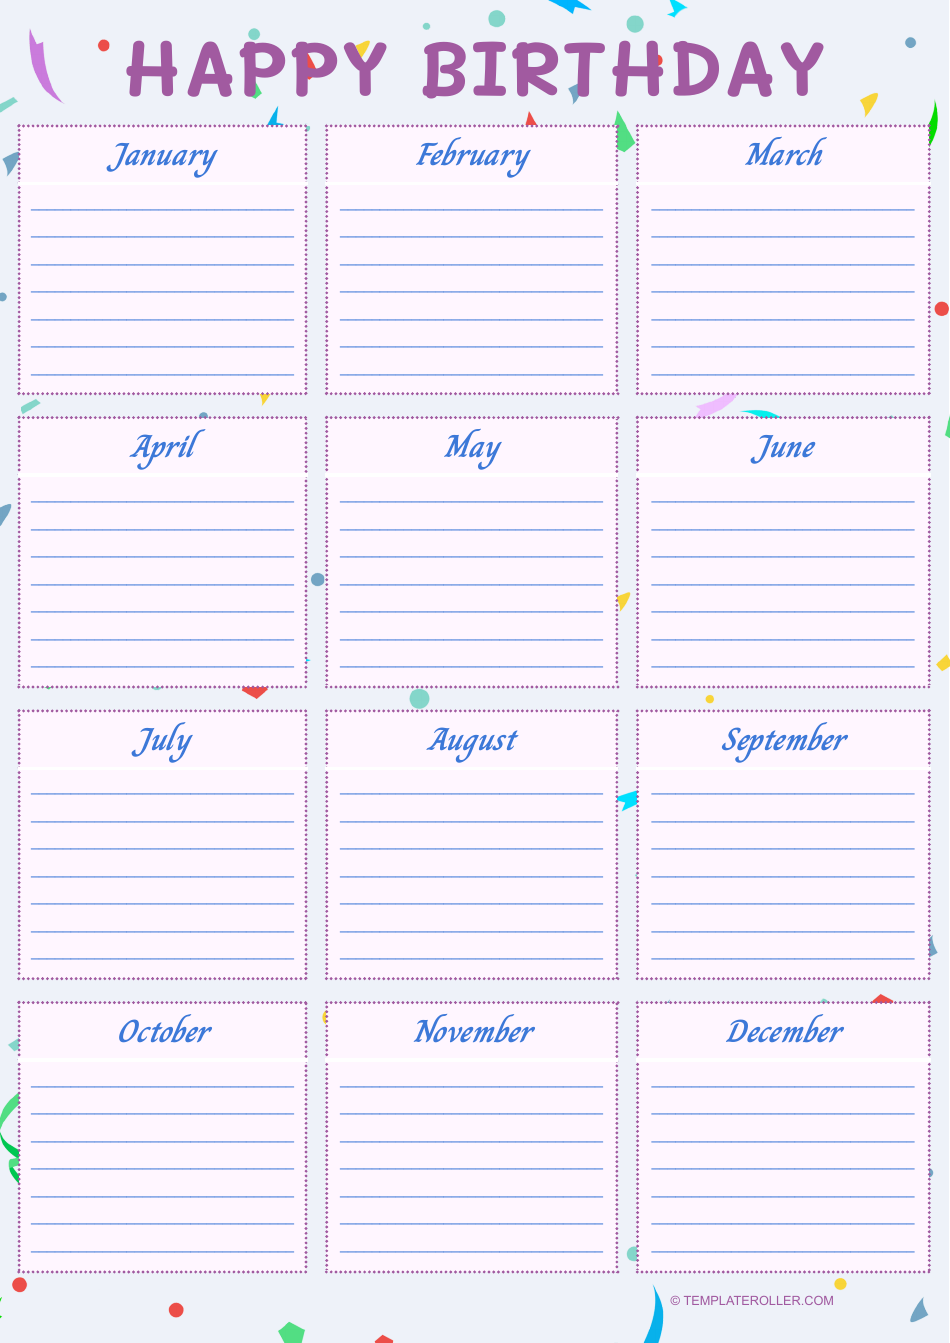 Birthday Calendar Template - Violet, Page 1